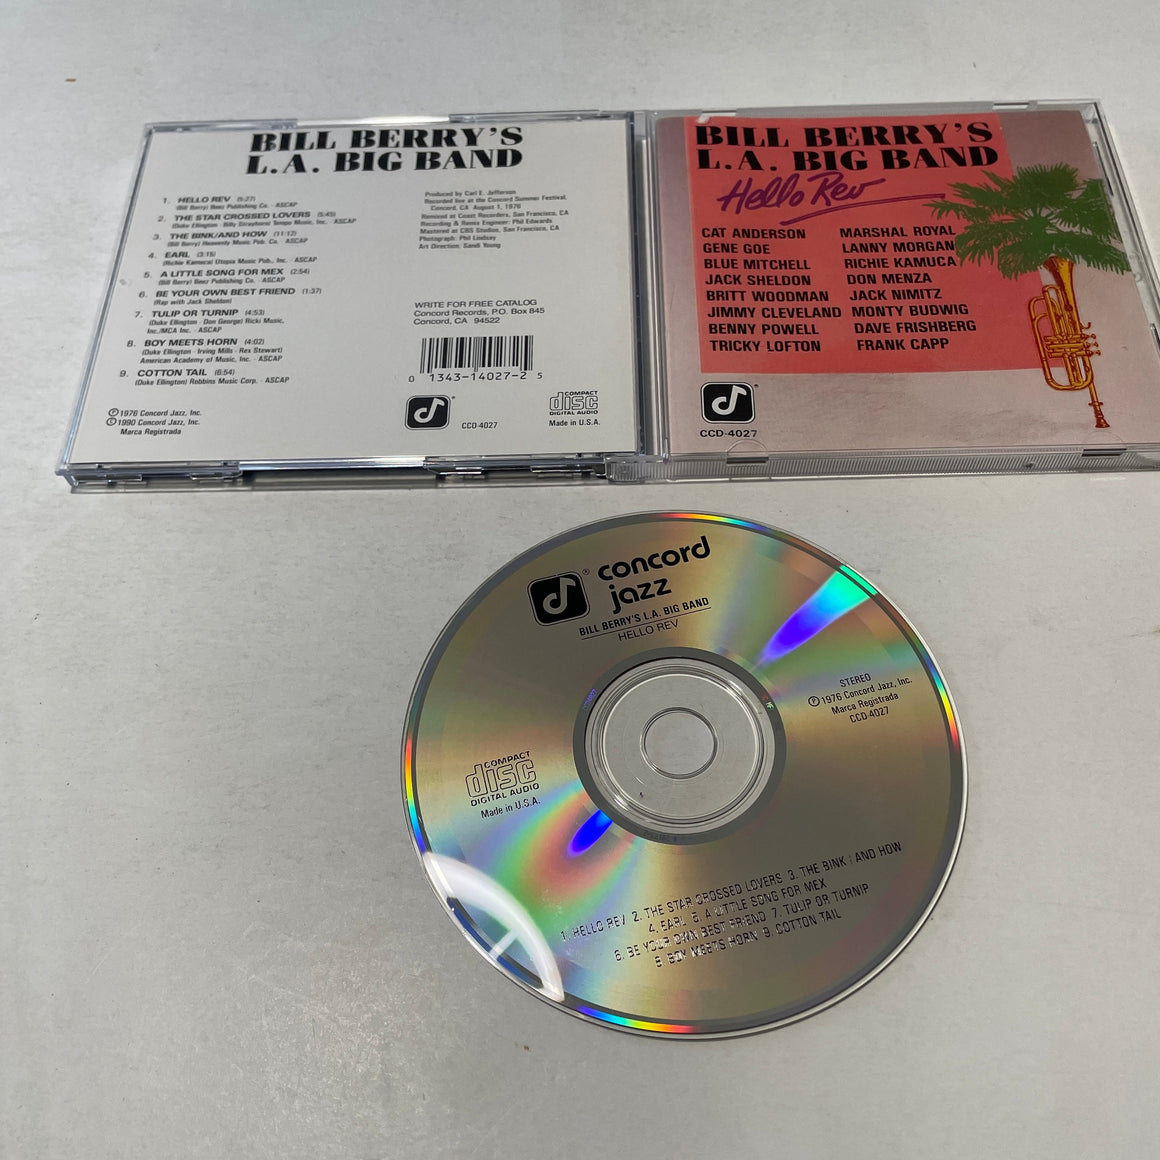 Bill Berry's L.A. Big Band Hello Rev Used CD VG+\VG+